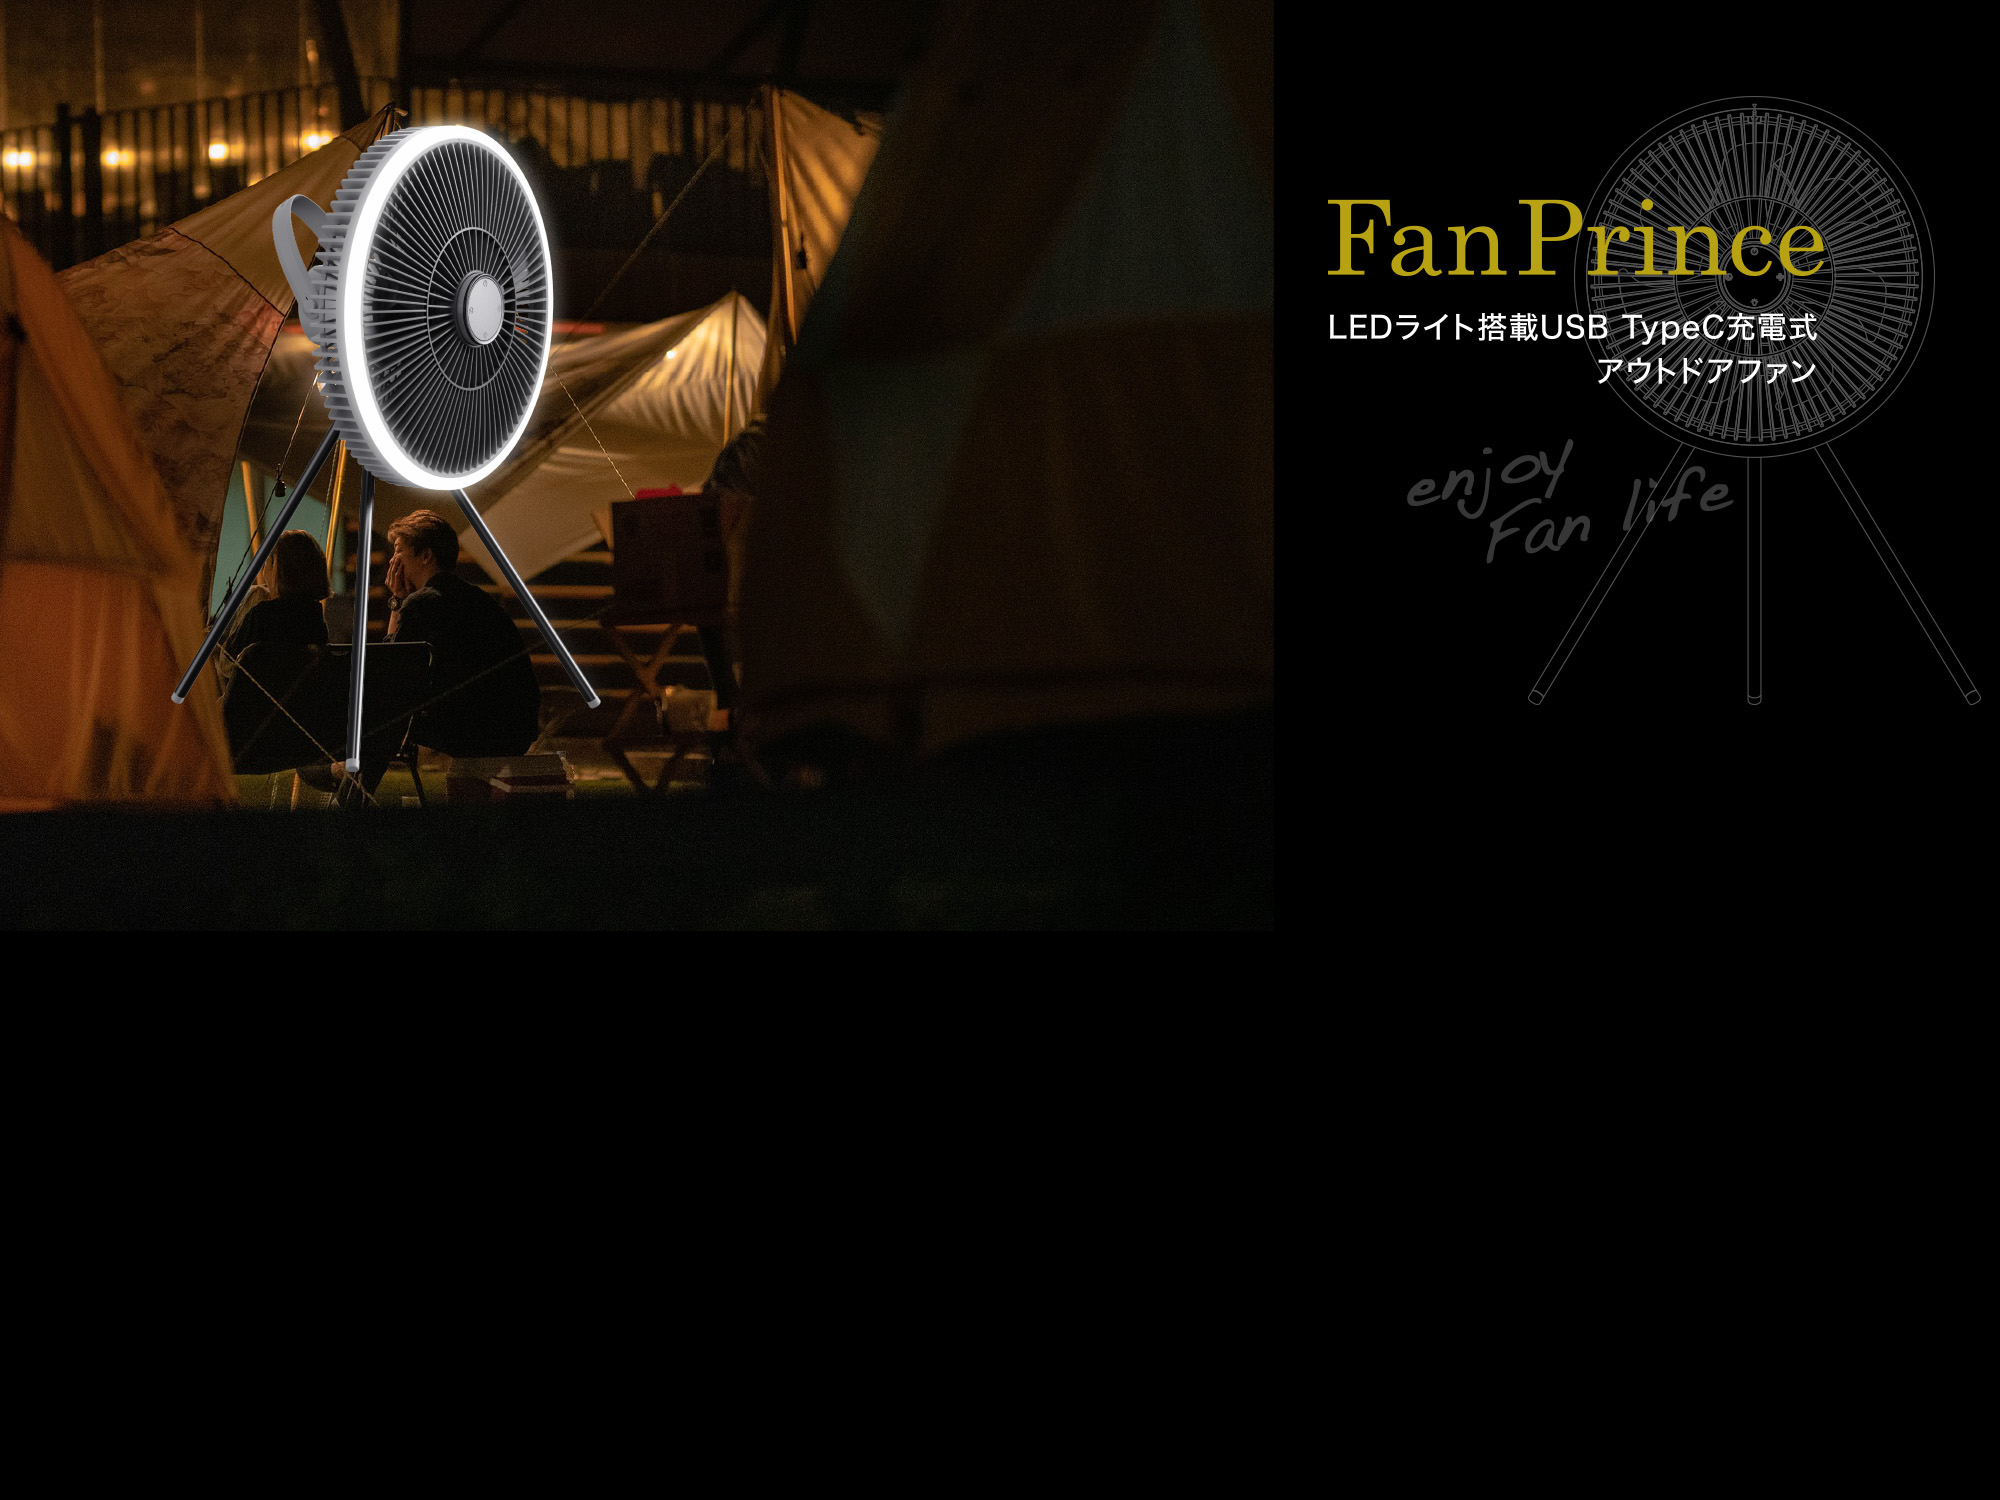 LED付きアウトドア向け充電式コードレスファン「FanPrince(ファンプリンス)」